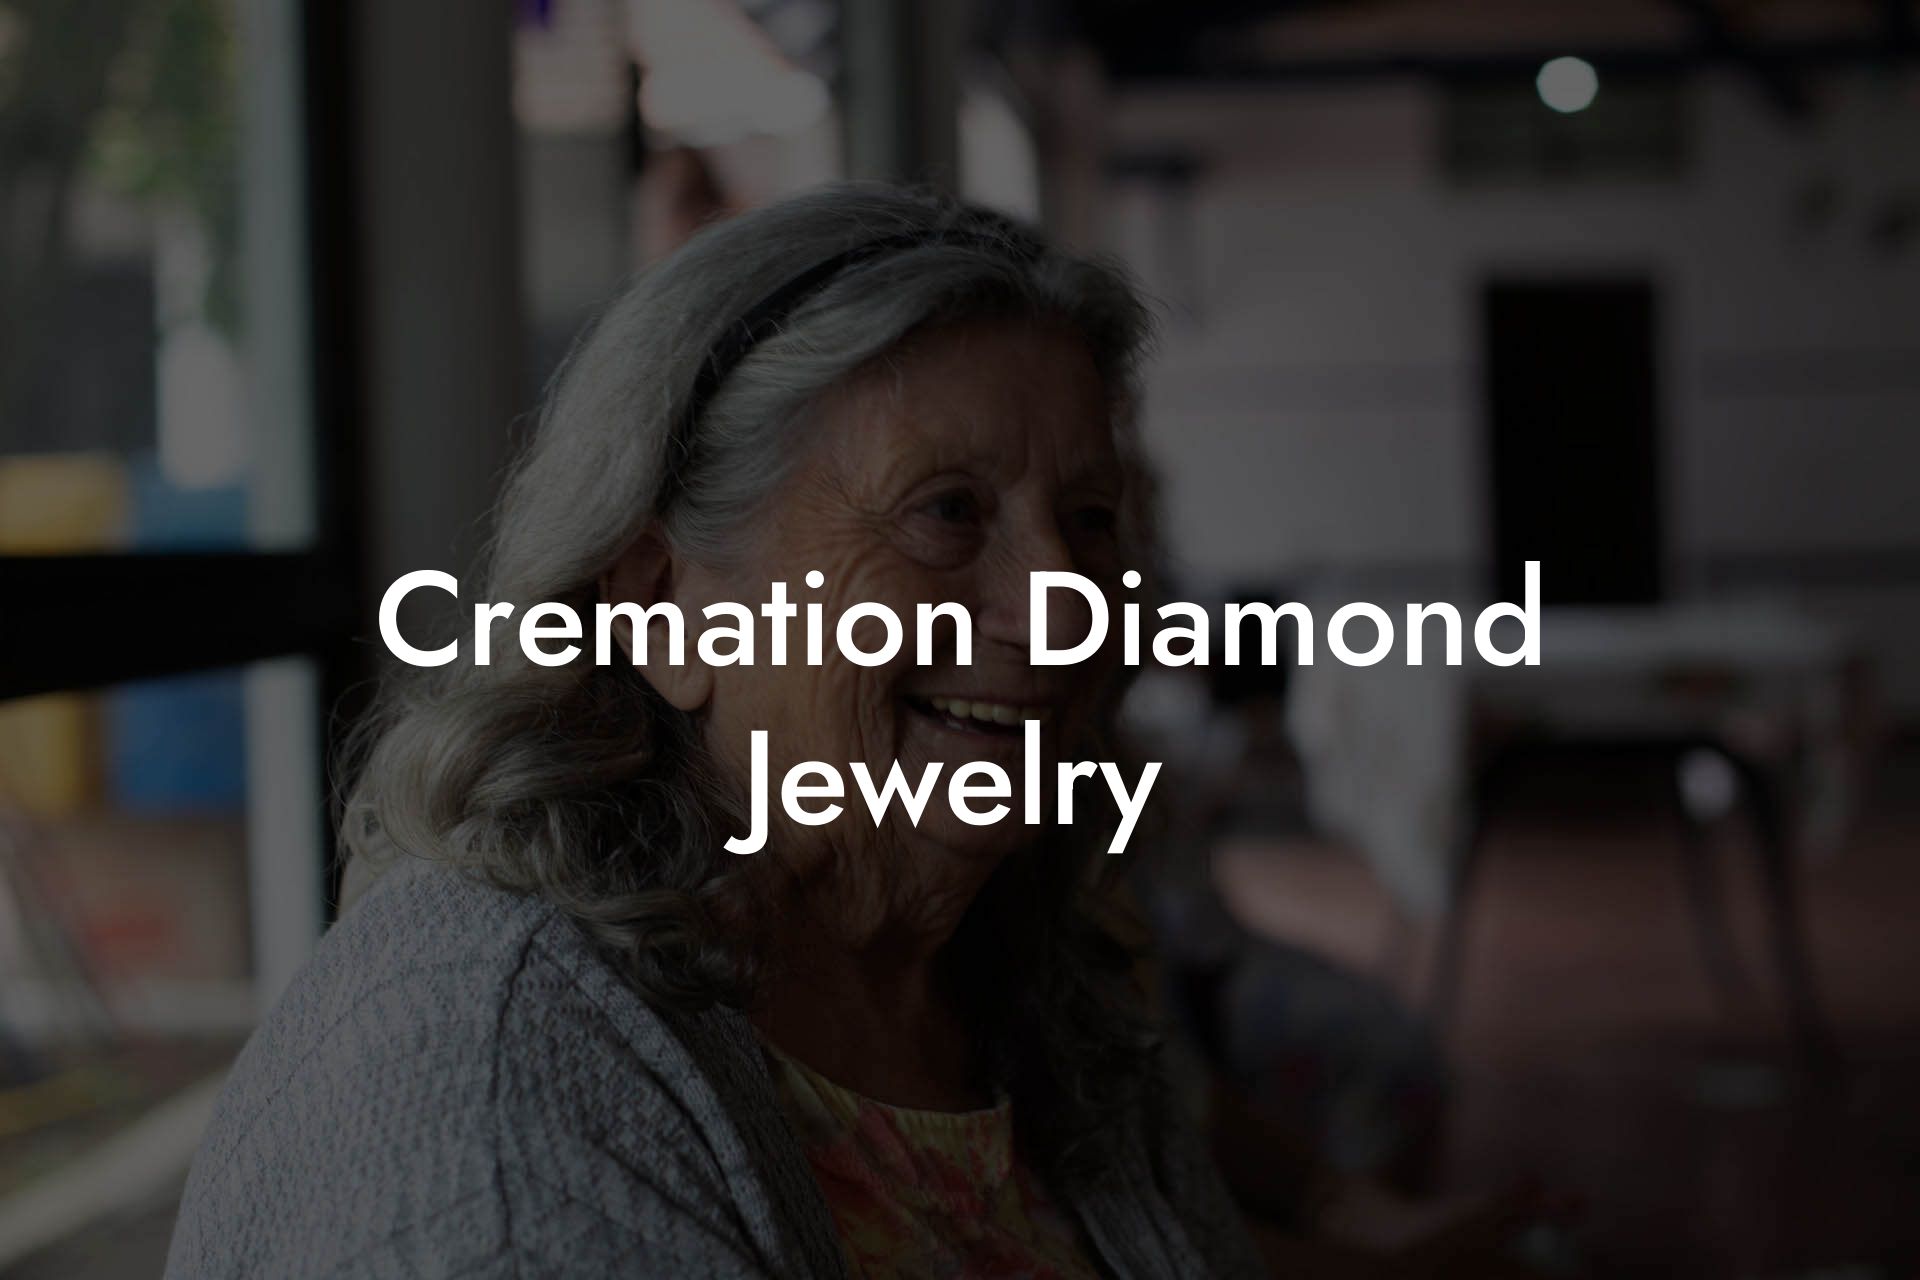 Cremation Diamond Jewelry